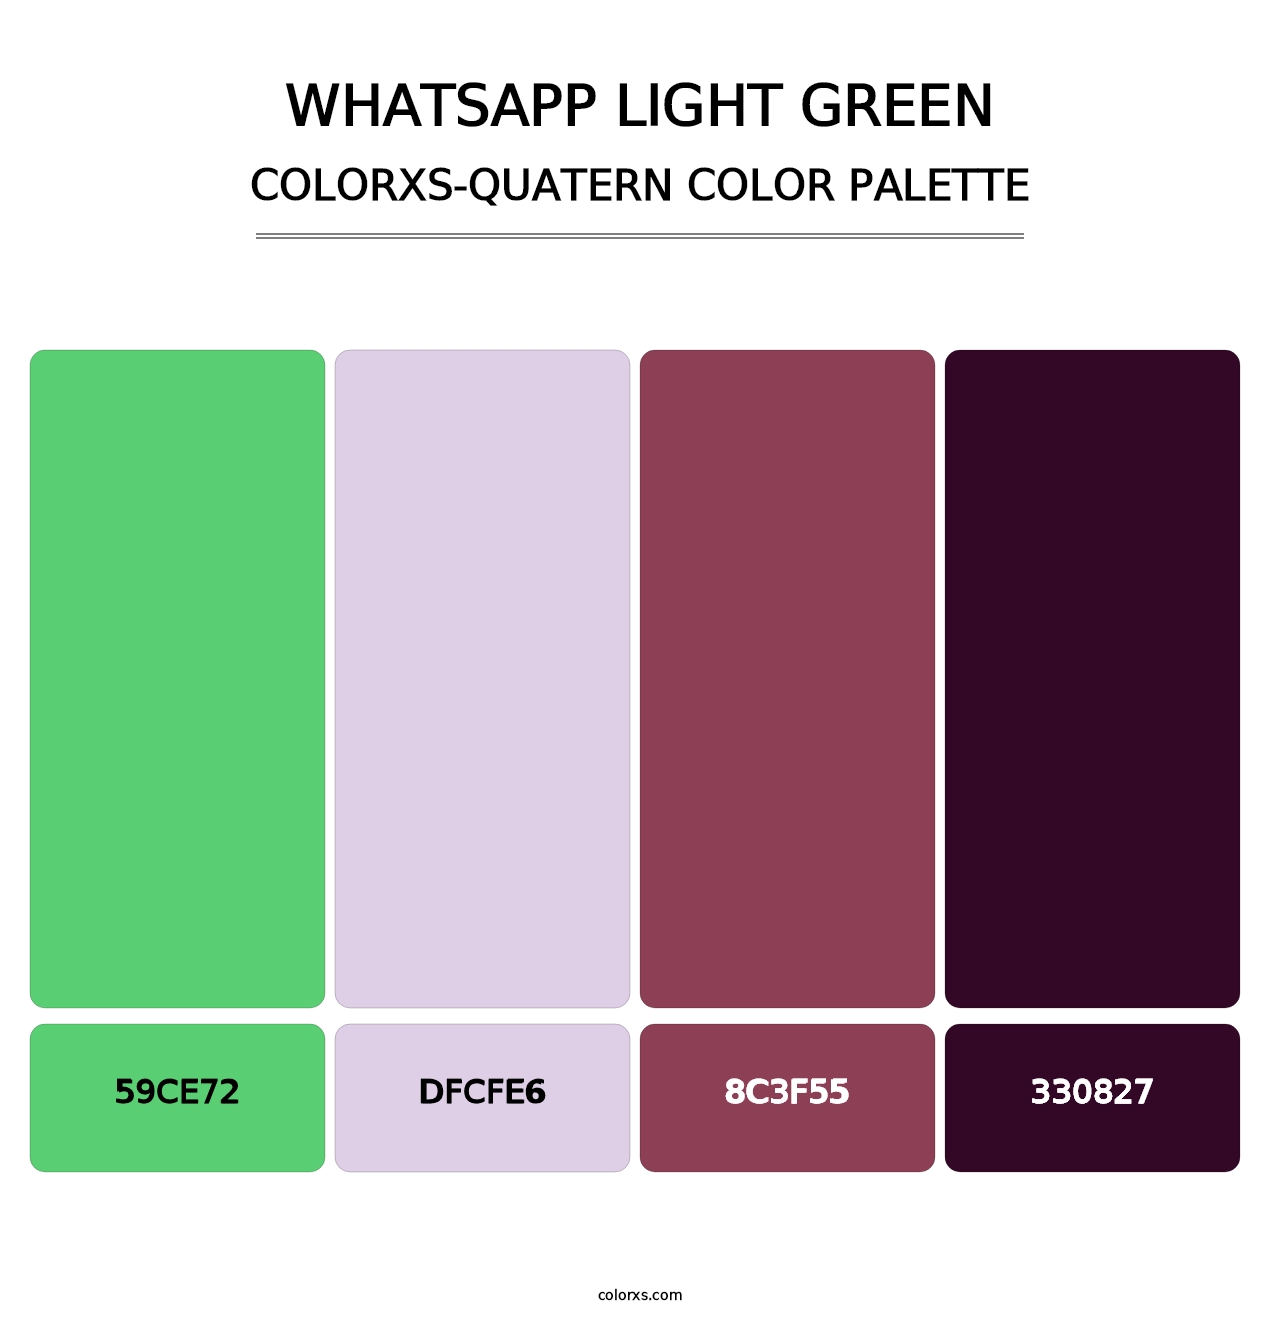 WhatsApp Light Green - Colorxs Quatern Palette